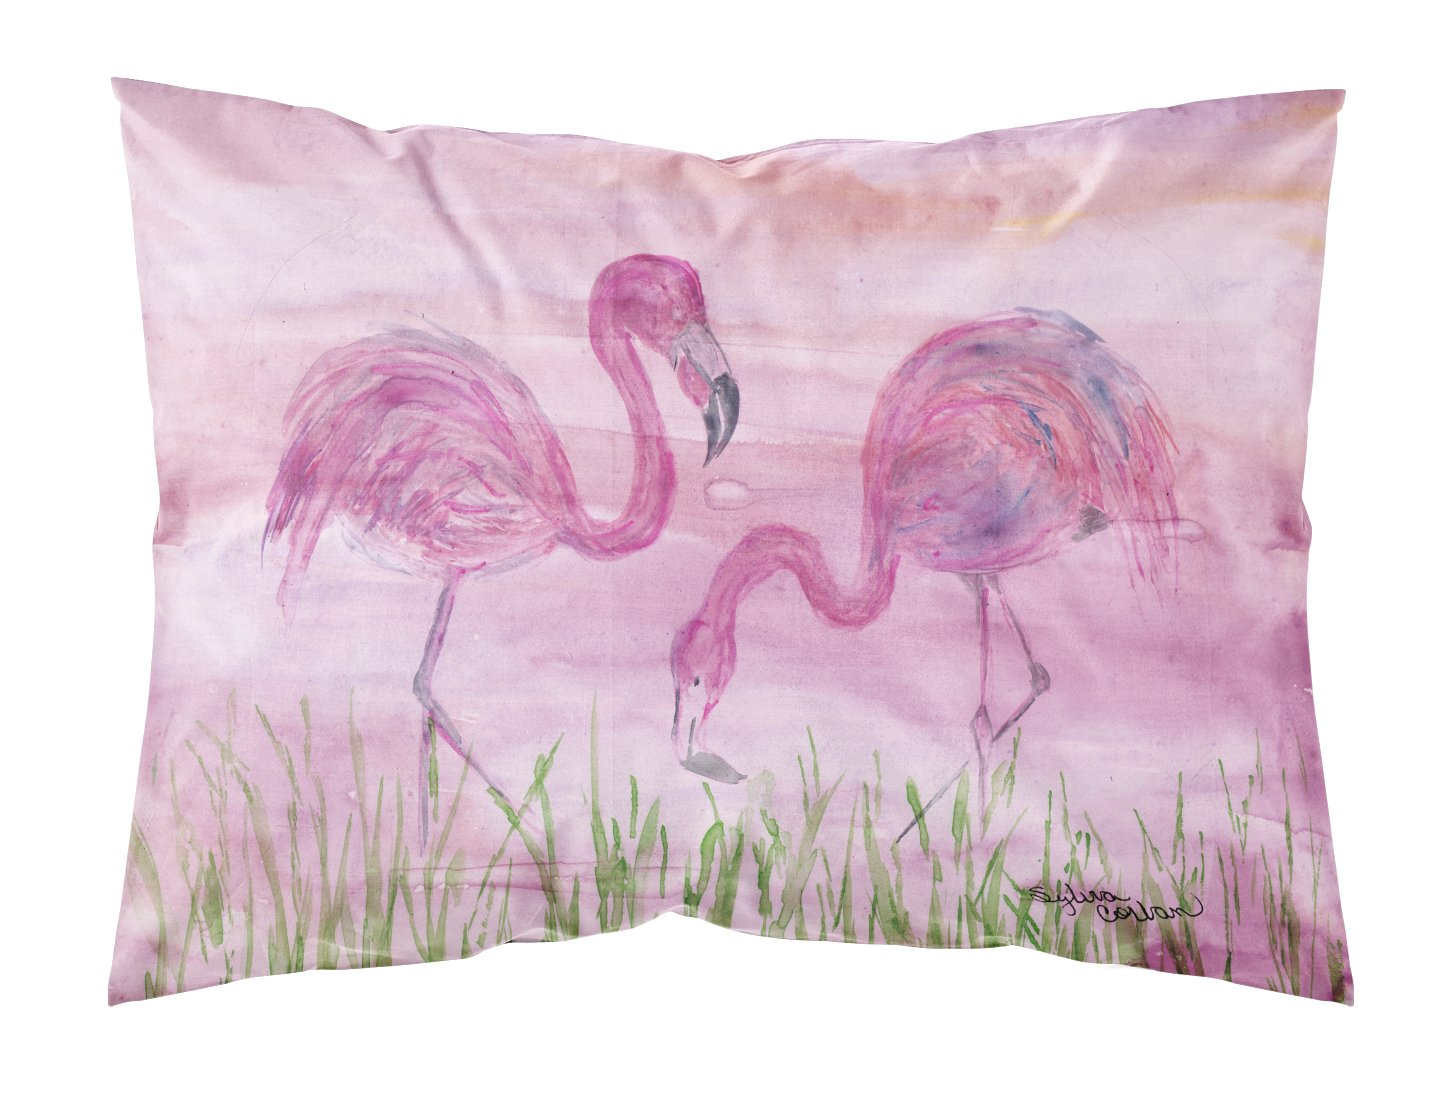 Flamingos Fabric Standard Pillowcase SC2018PILLOWCASE by Caroline's Treasures